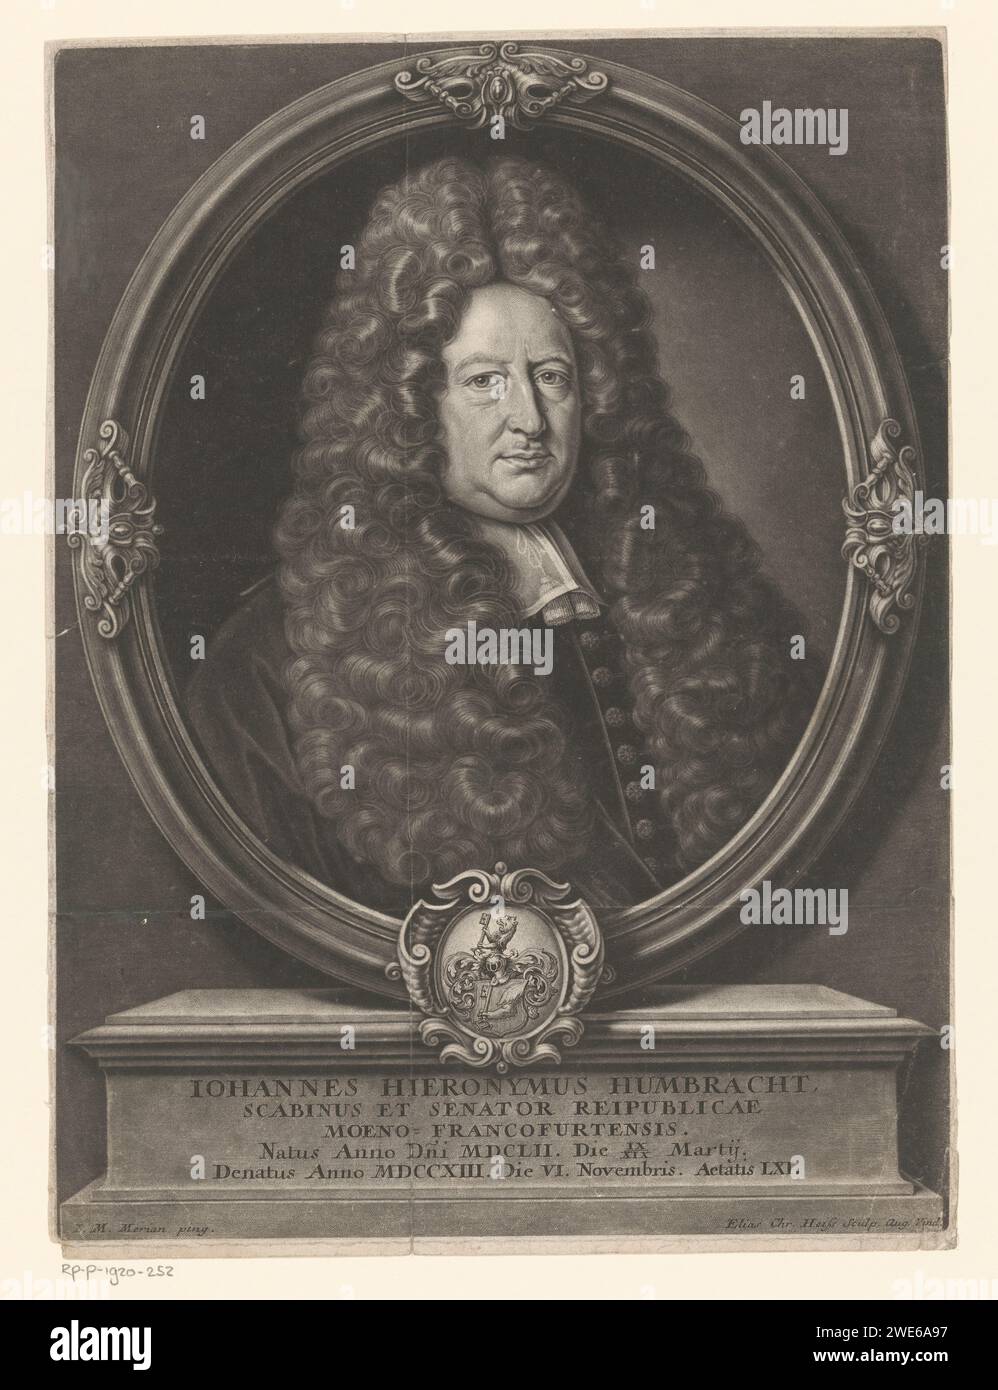 Ritratto van Johann Hieronymus Humbracht, Elias Christopf Heiss, dopo Johann Matthäus von Merian, 1713 - 1731 stampa di carta Augusta che incide personaggi storici. cuscinetto araldico Foto Stock